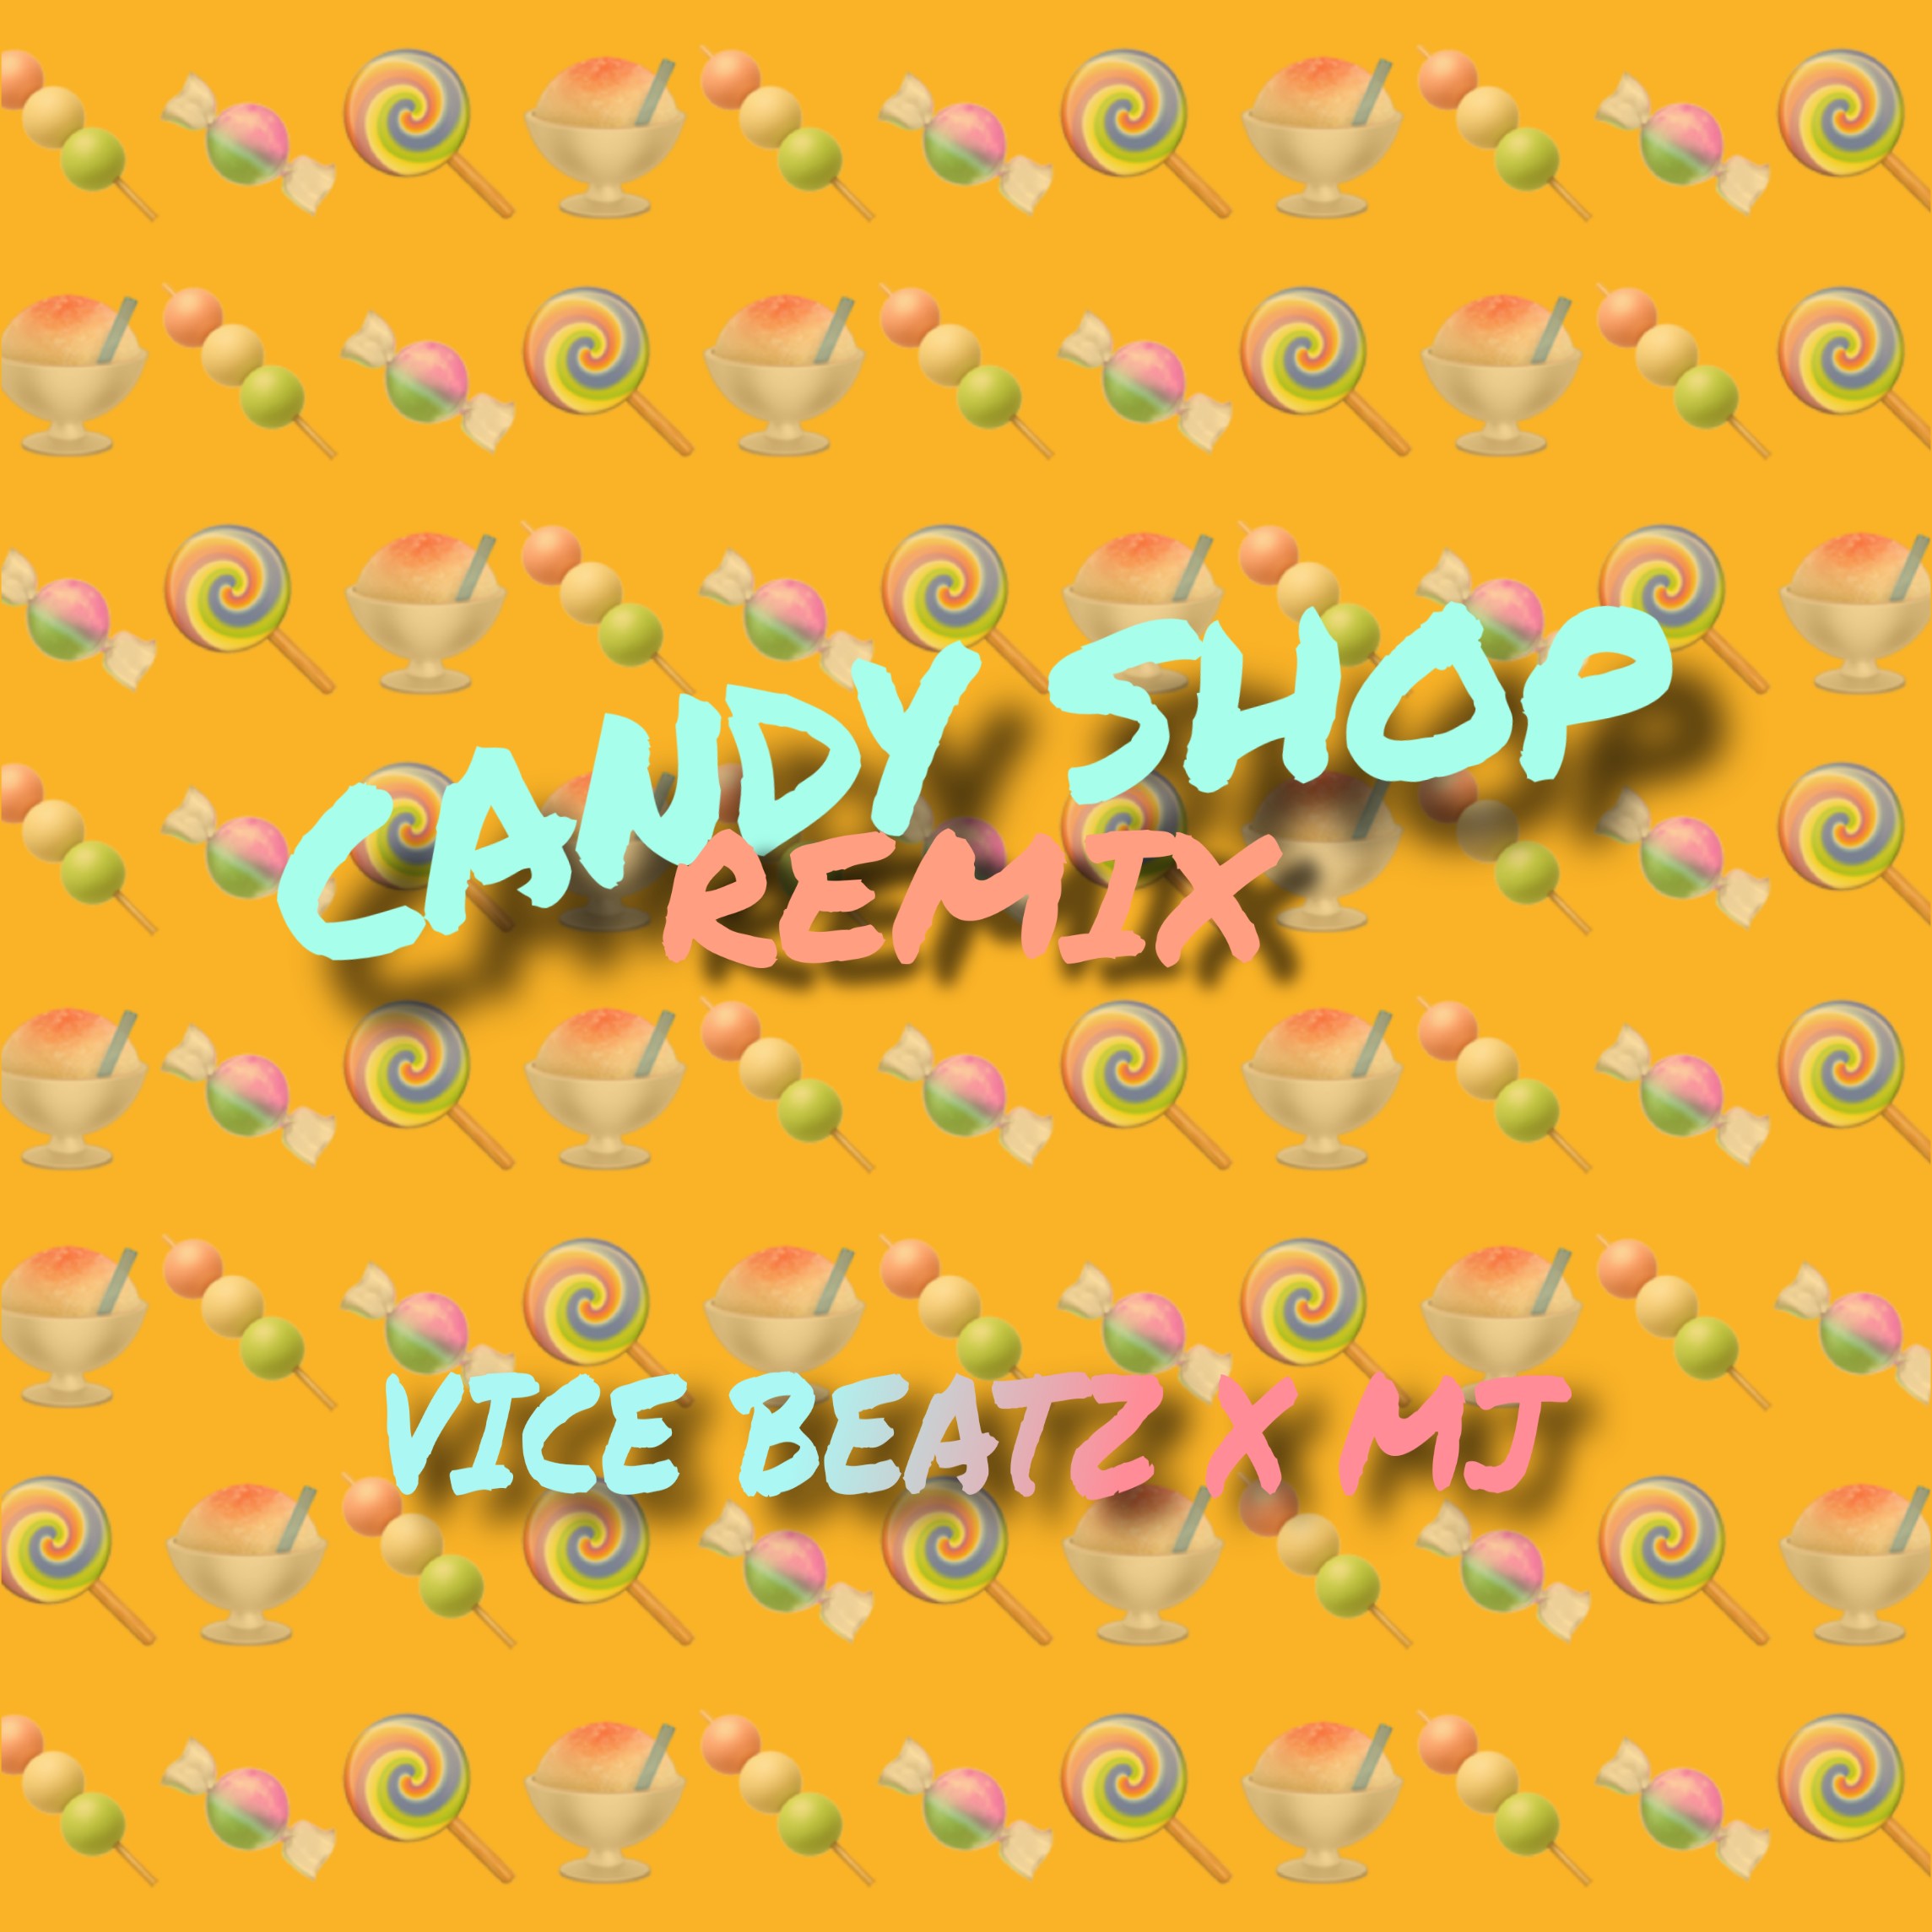 Скачать Candy Shop (Vice_Beatz & MJ Remix)_ CLICK ON 'BUY' For Free Download